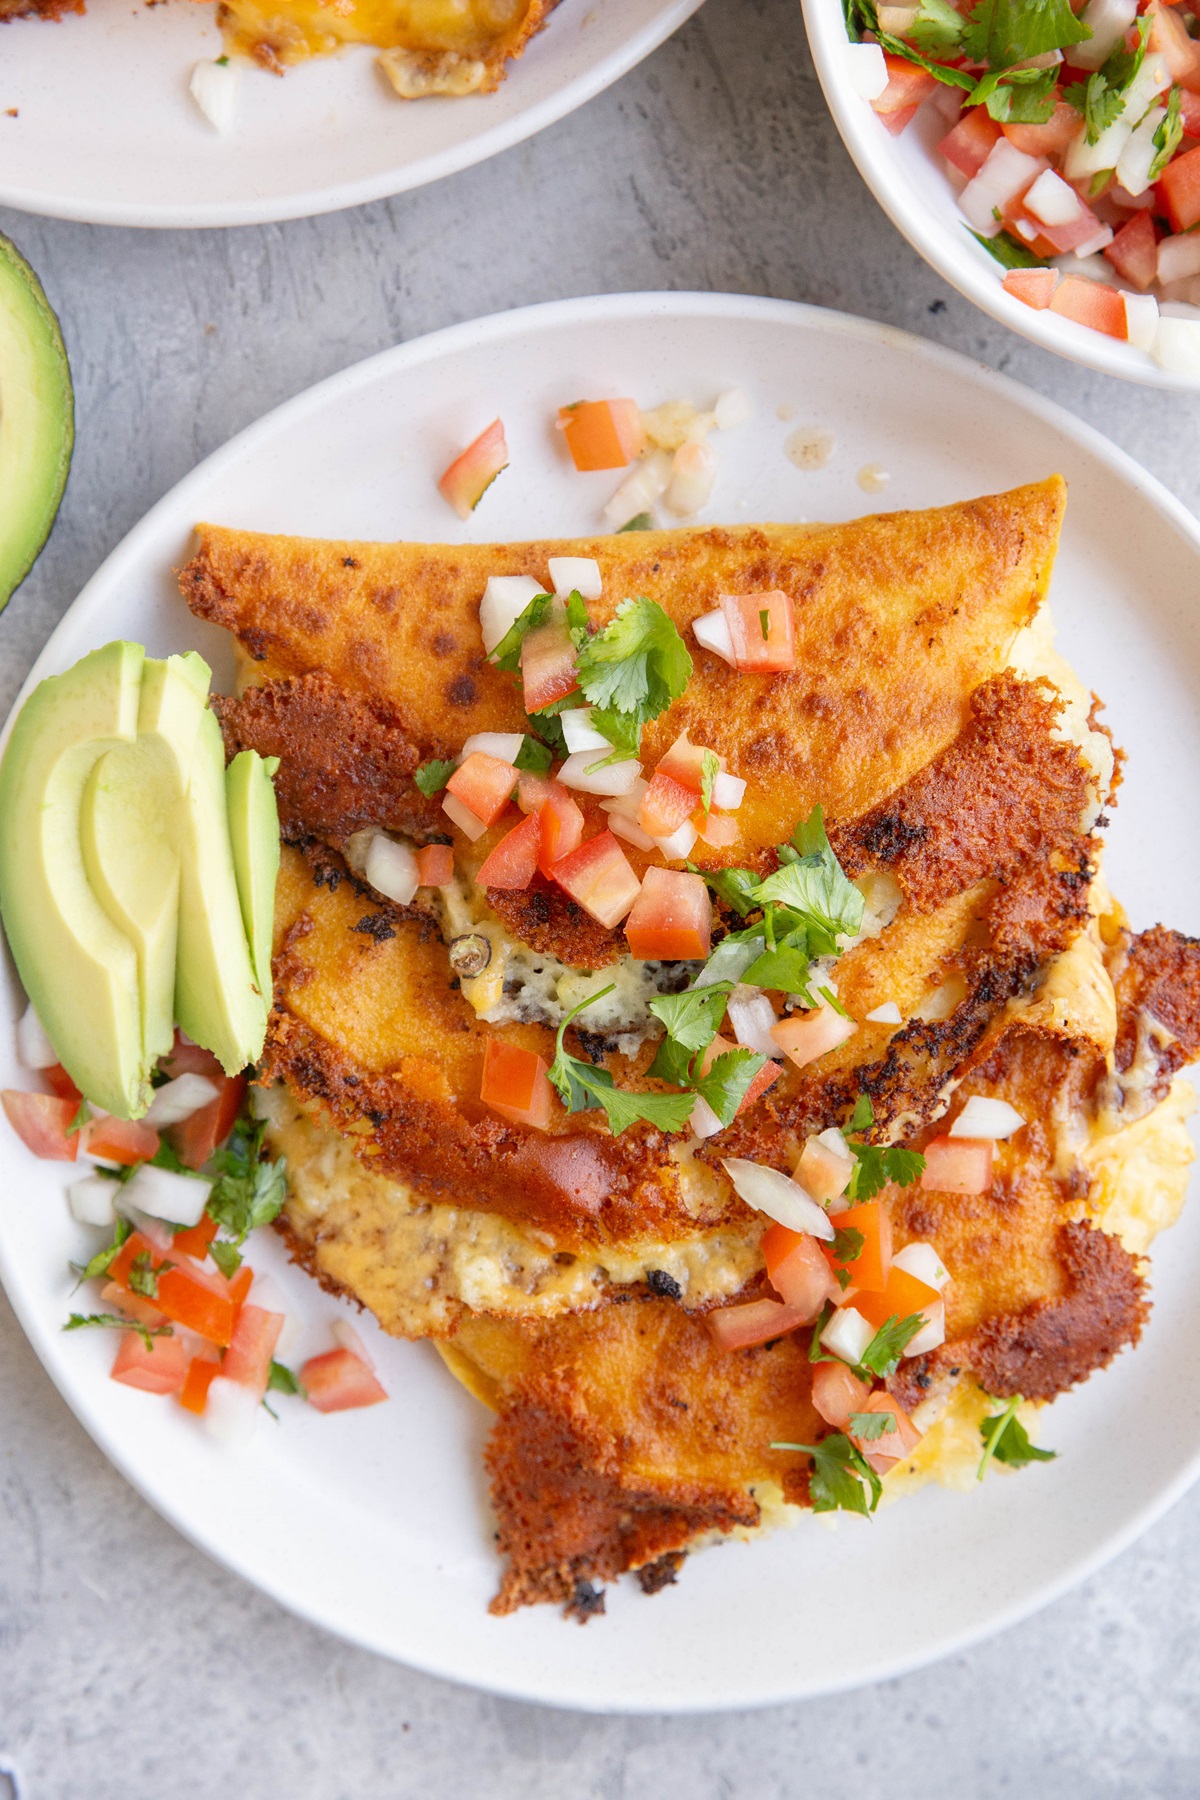 Crispy cheesy potato tacos on a plate with slices of avocado and homemade pico de gallo